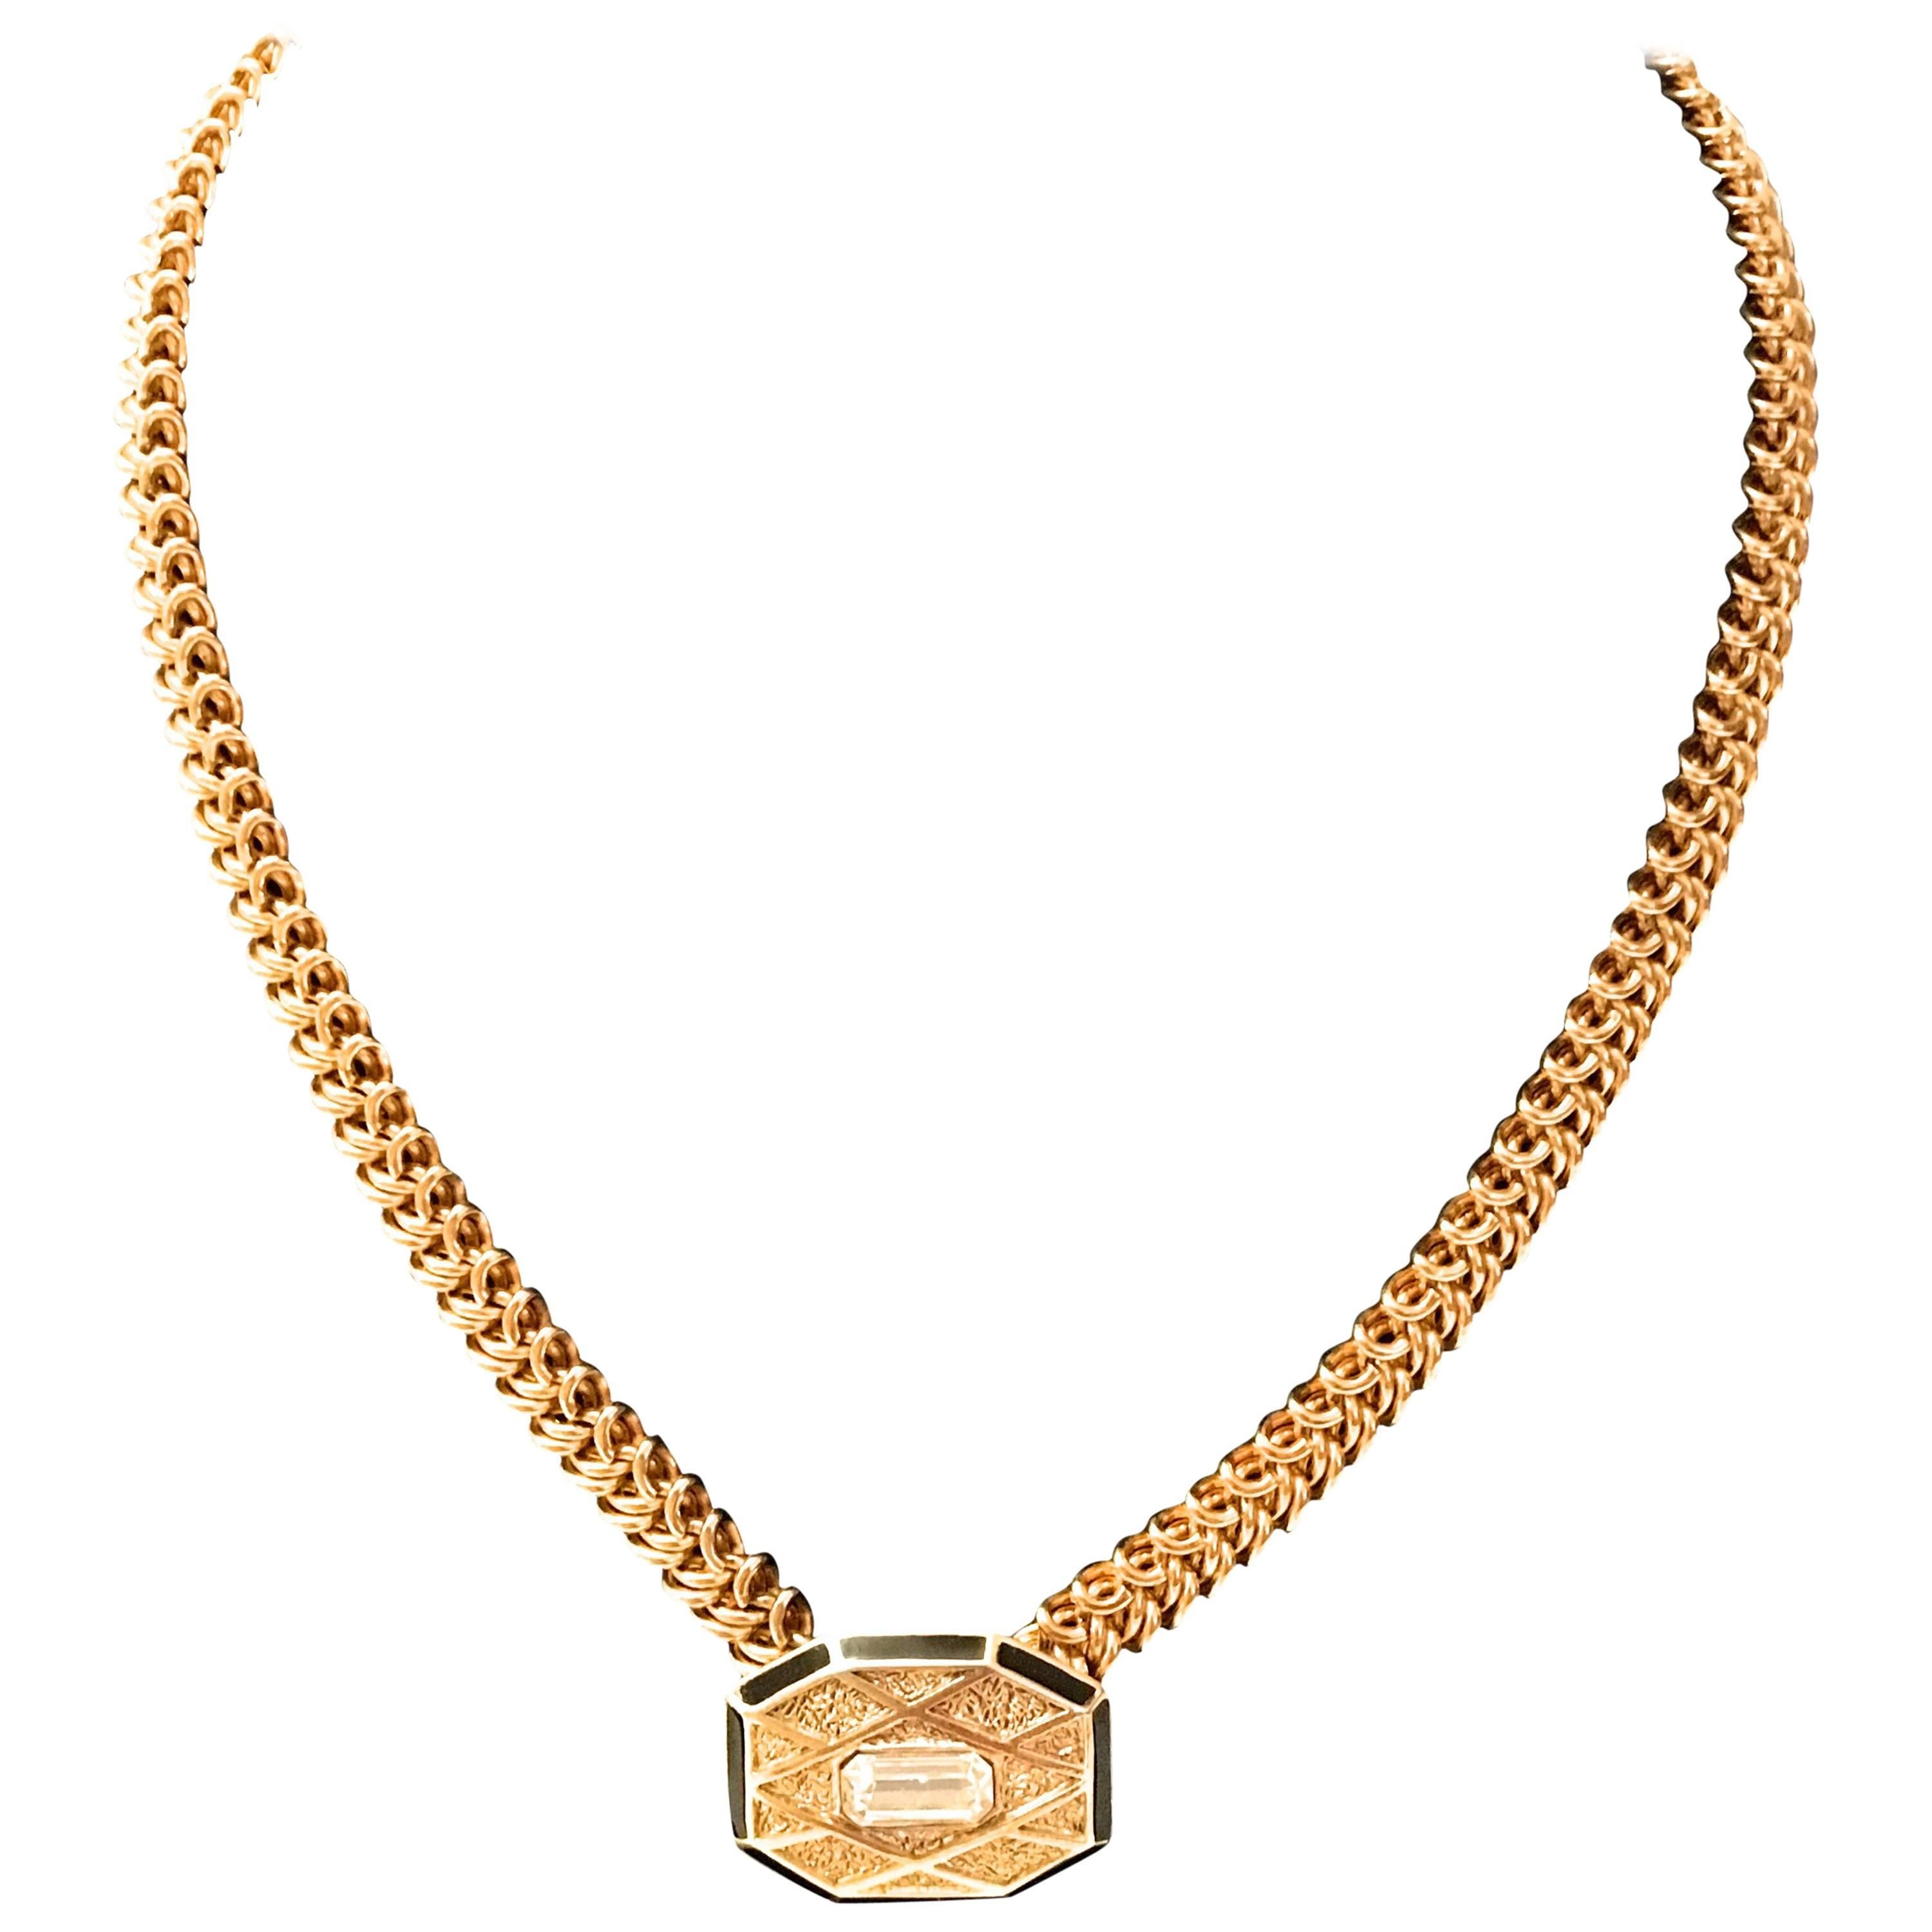 Balenciaga Necklace -Gold Tone Metal w/ Pendant - 1980s For Sale